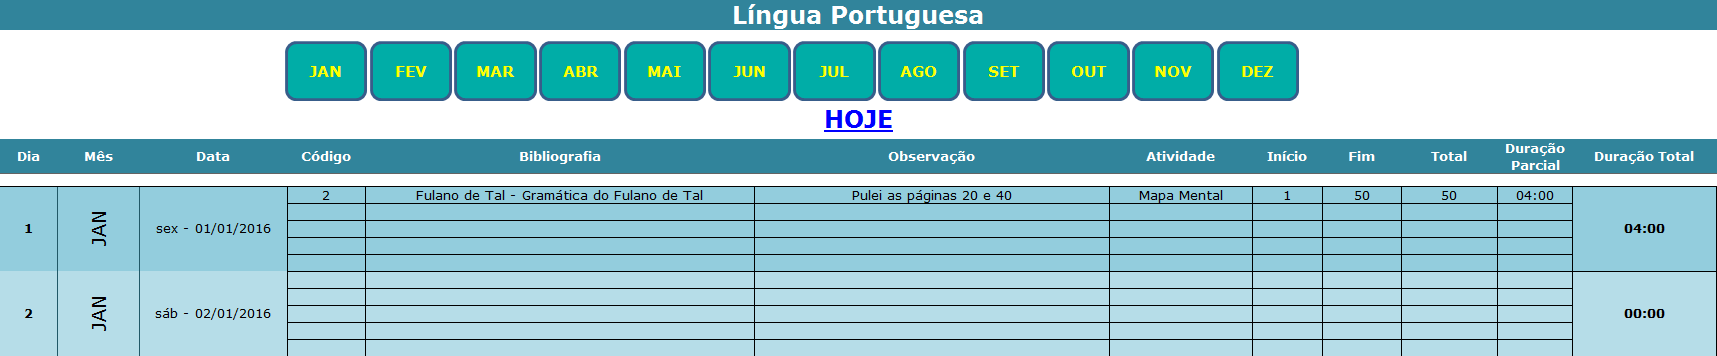 Planilha-de-Estudos-Senado-Federal-Lingua-Portuguesa